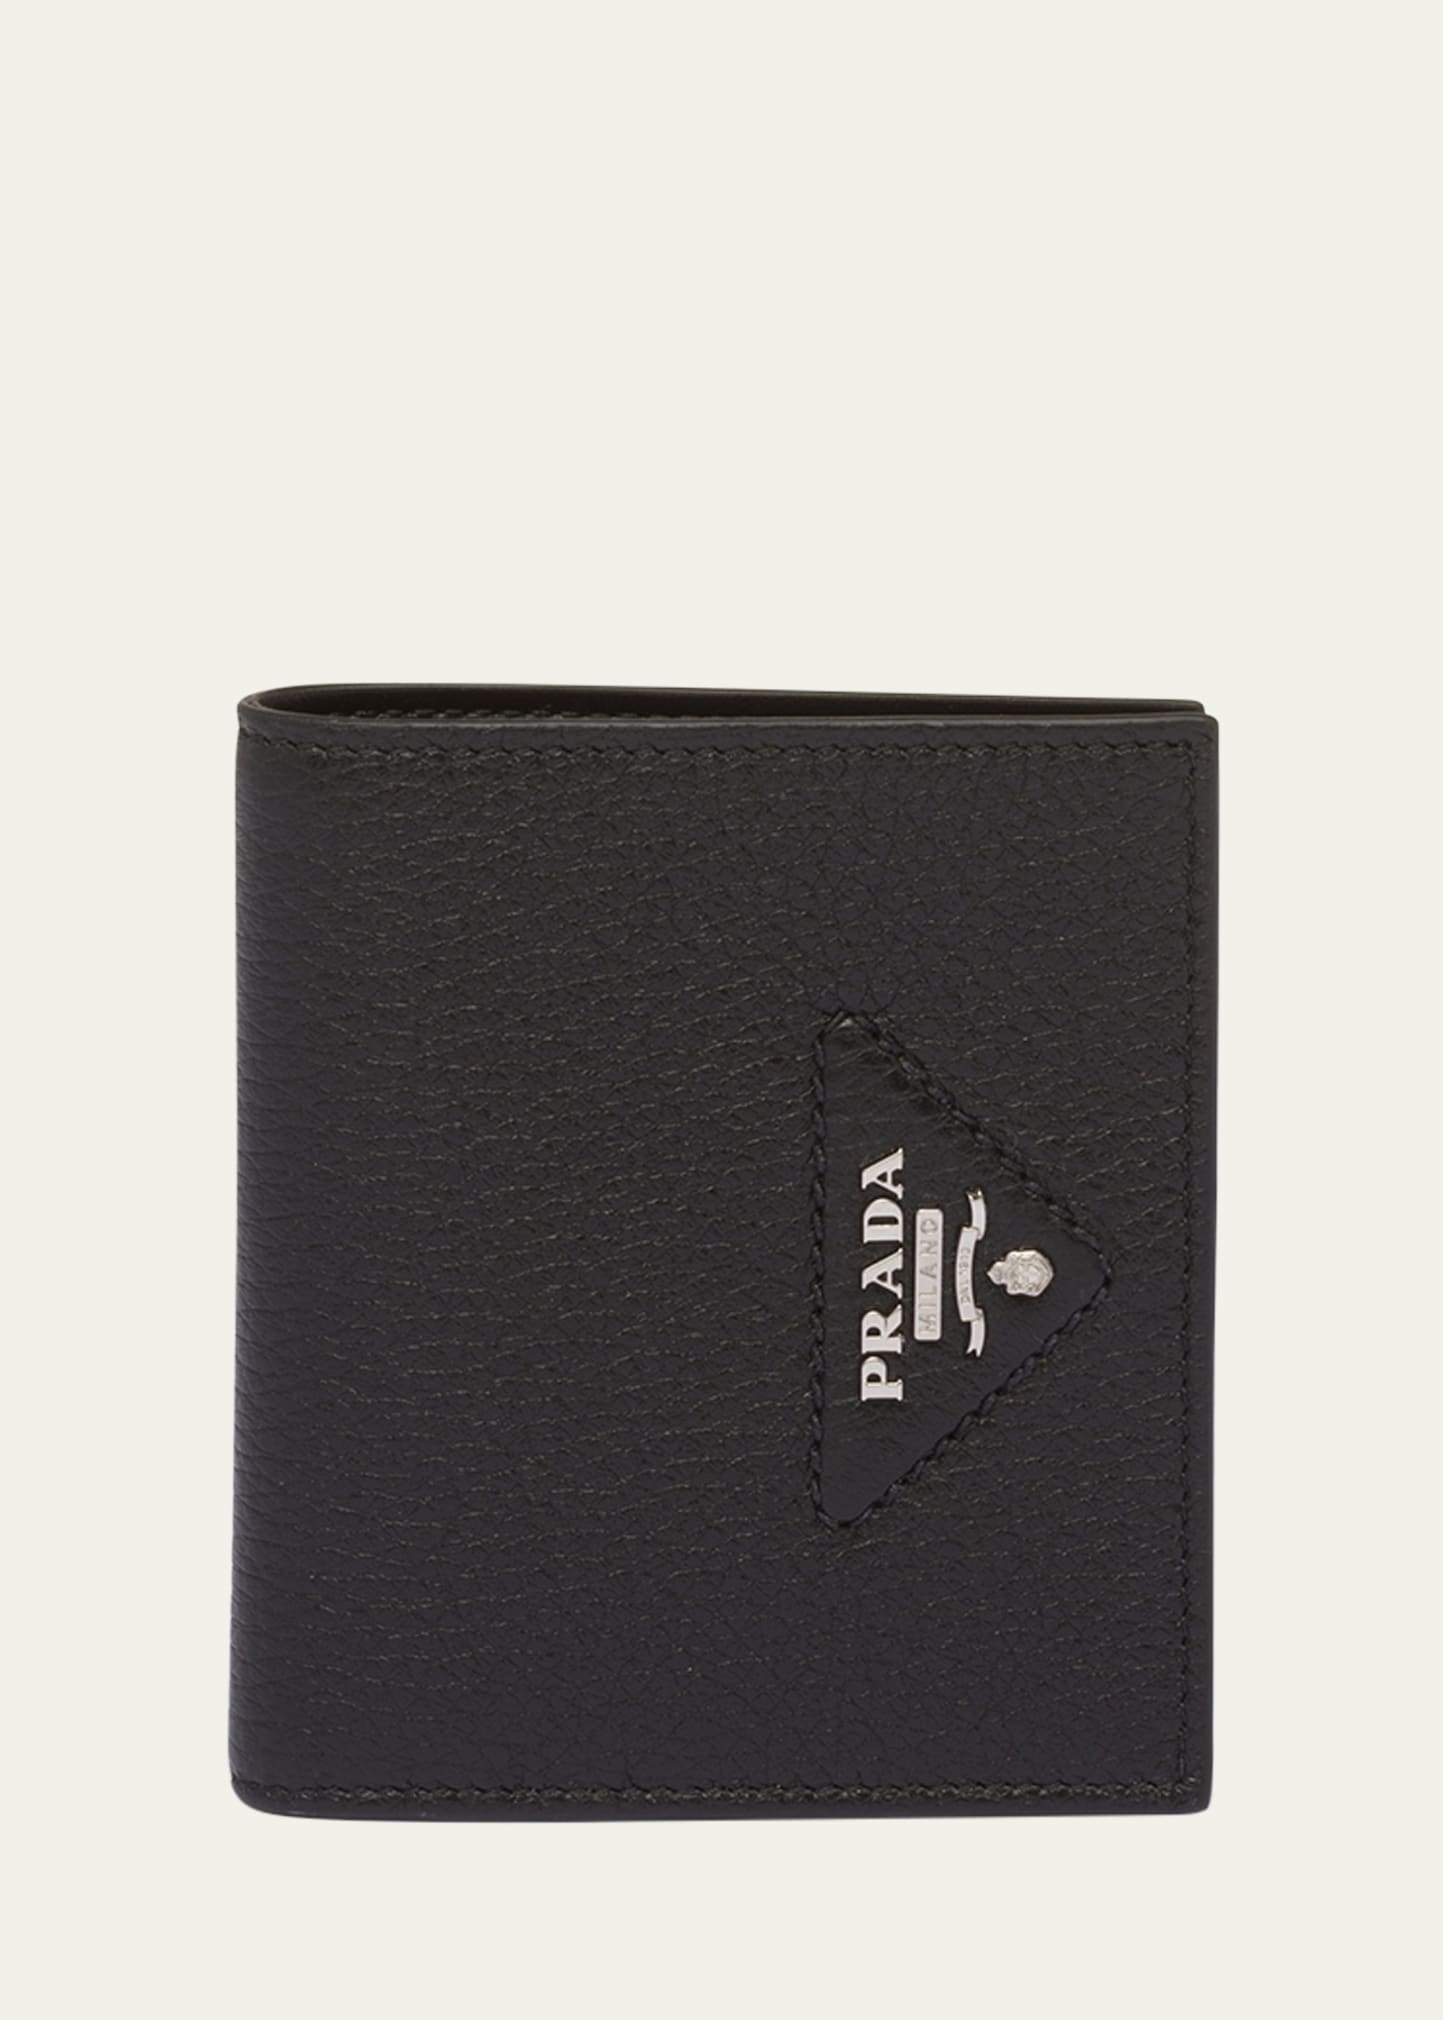 Prada Men's Leather Bifold Wallet In Black